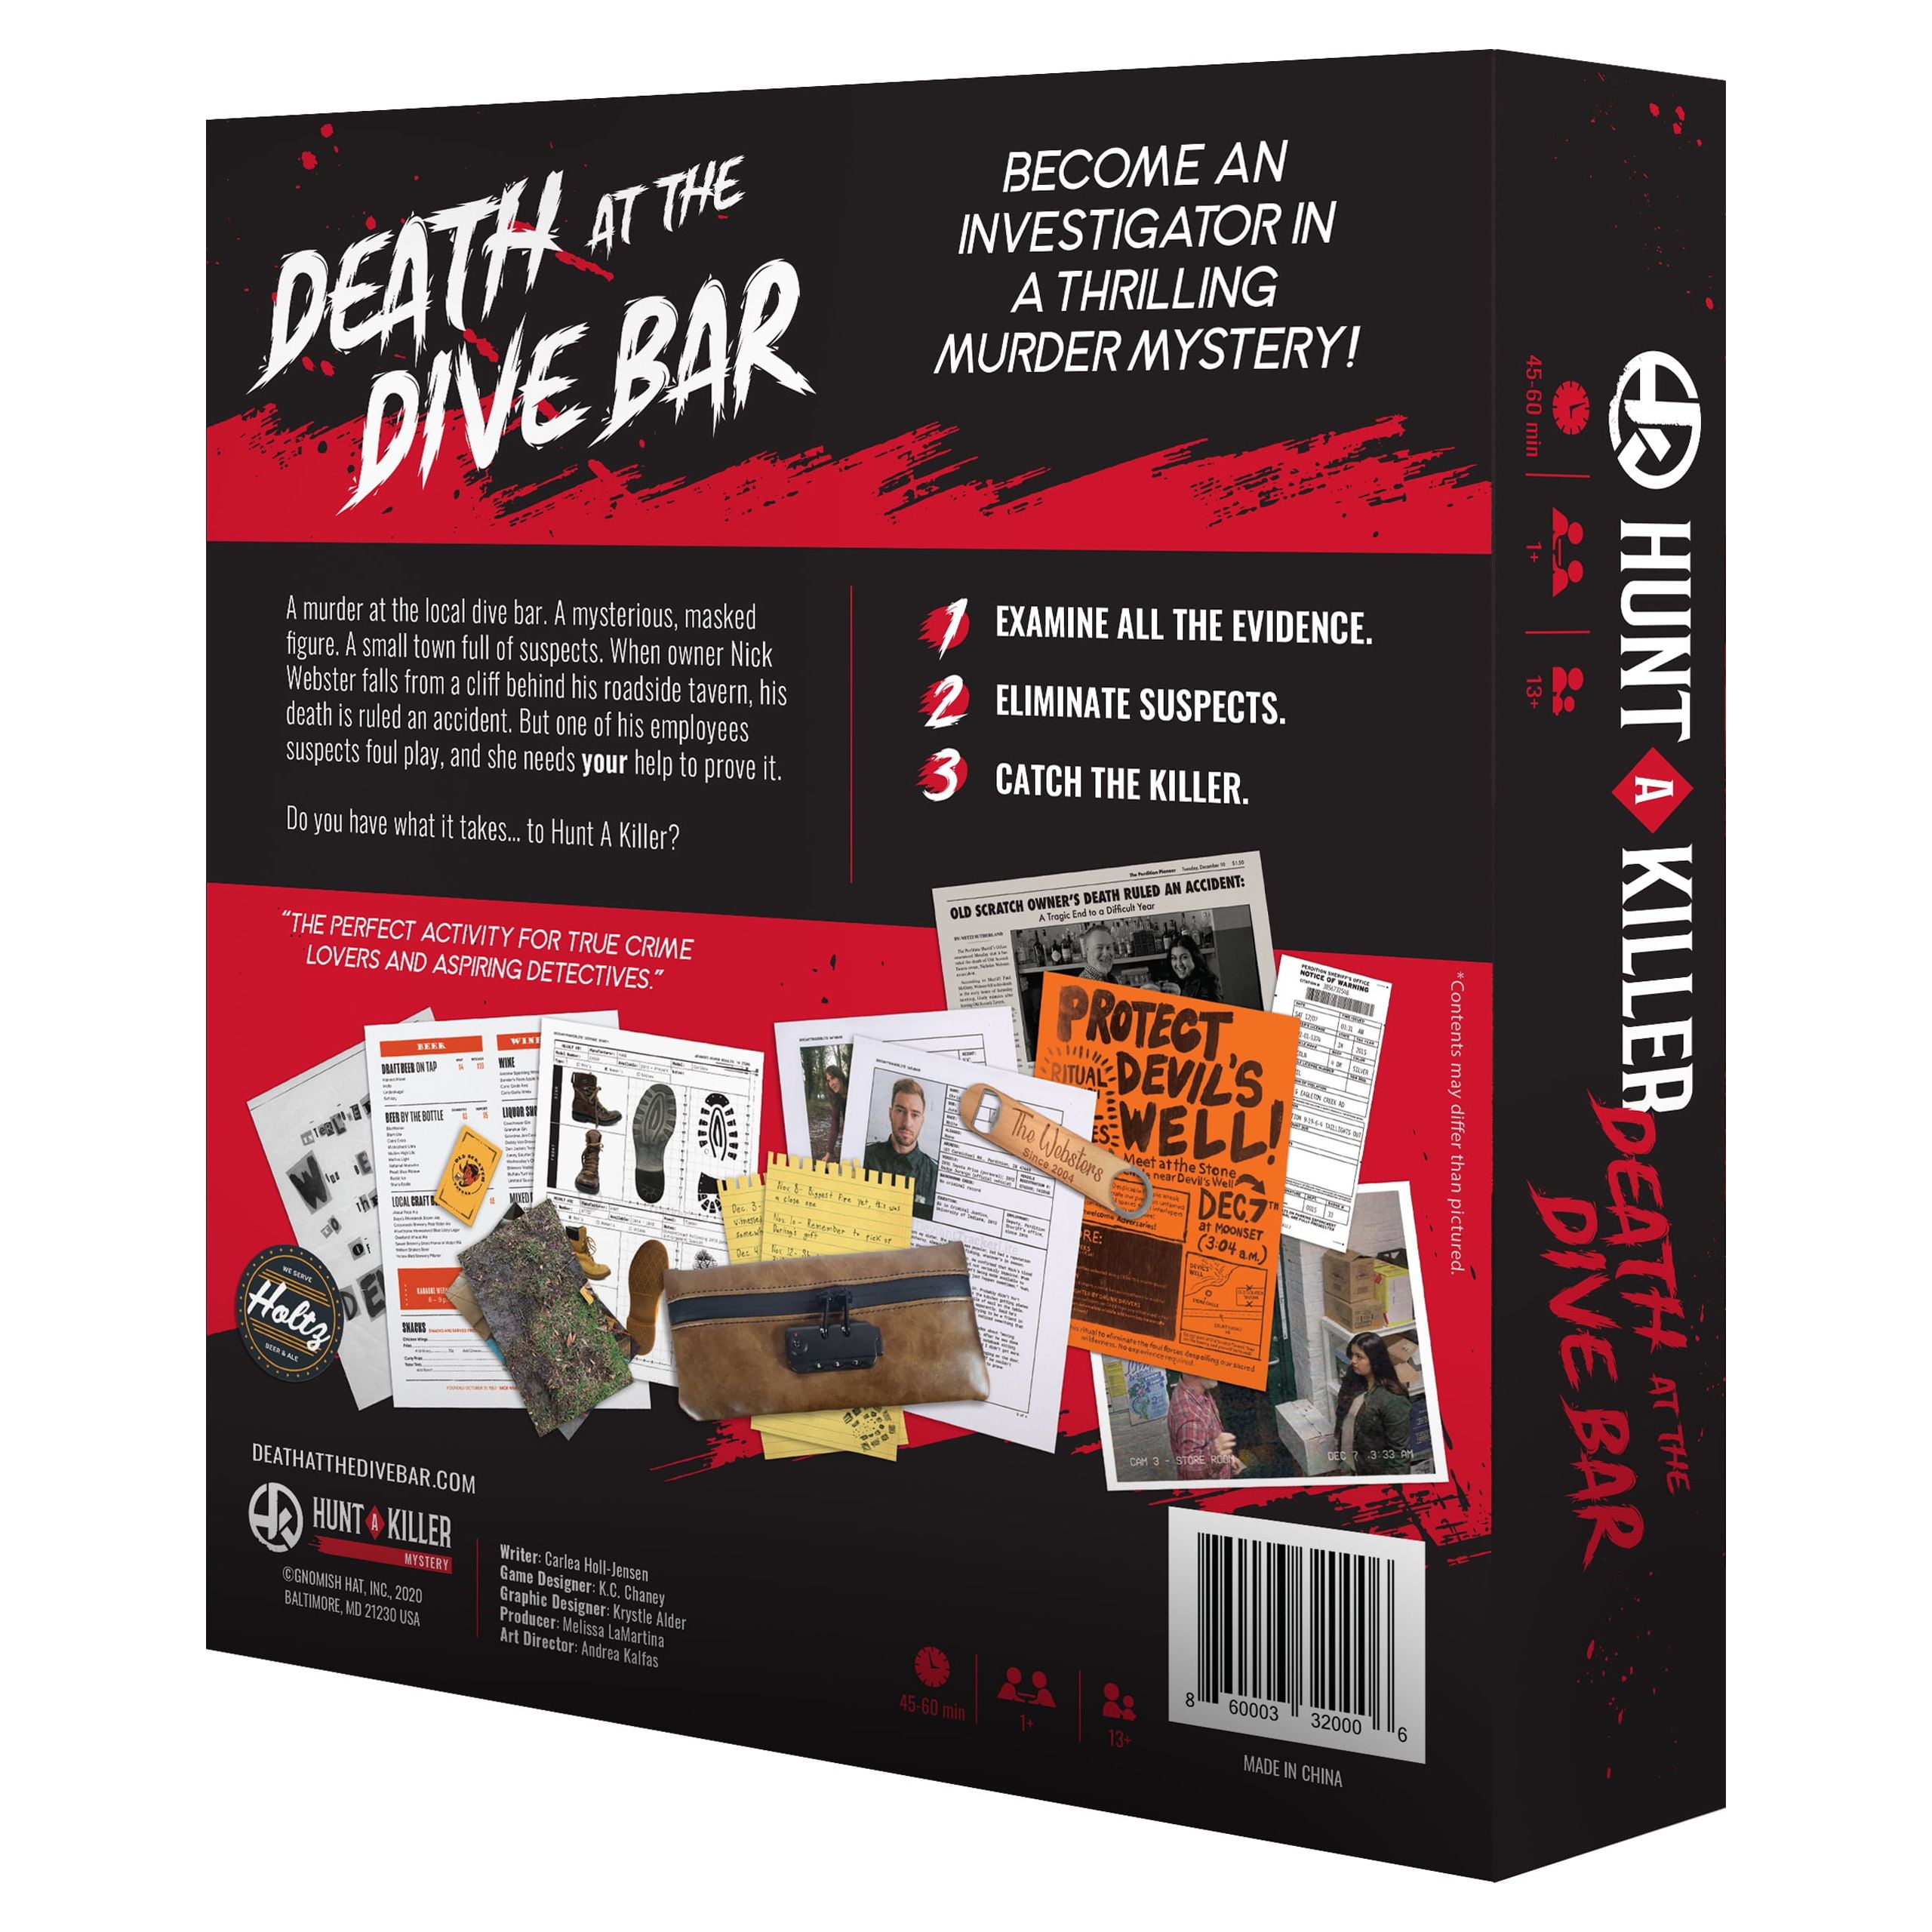 Hunt a Killer: Dead Below Deck - Immersive Thrilling Murder